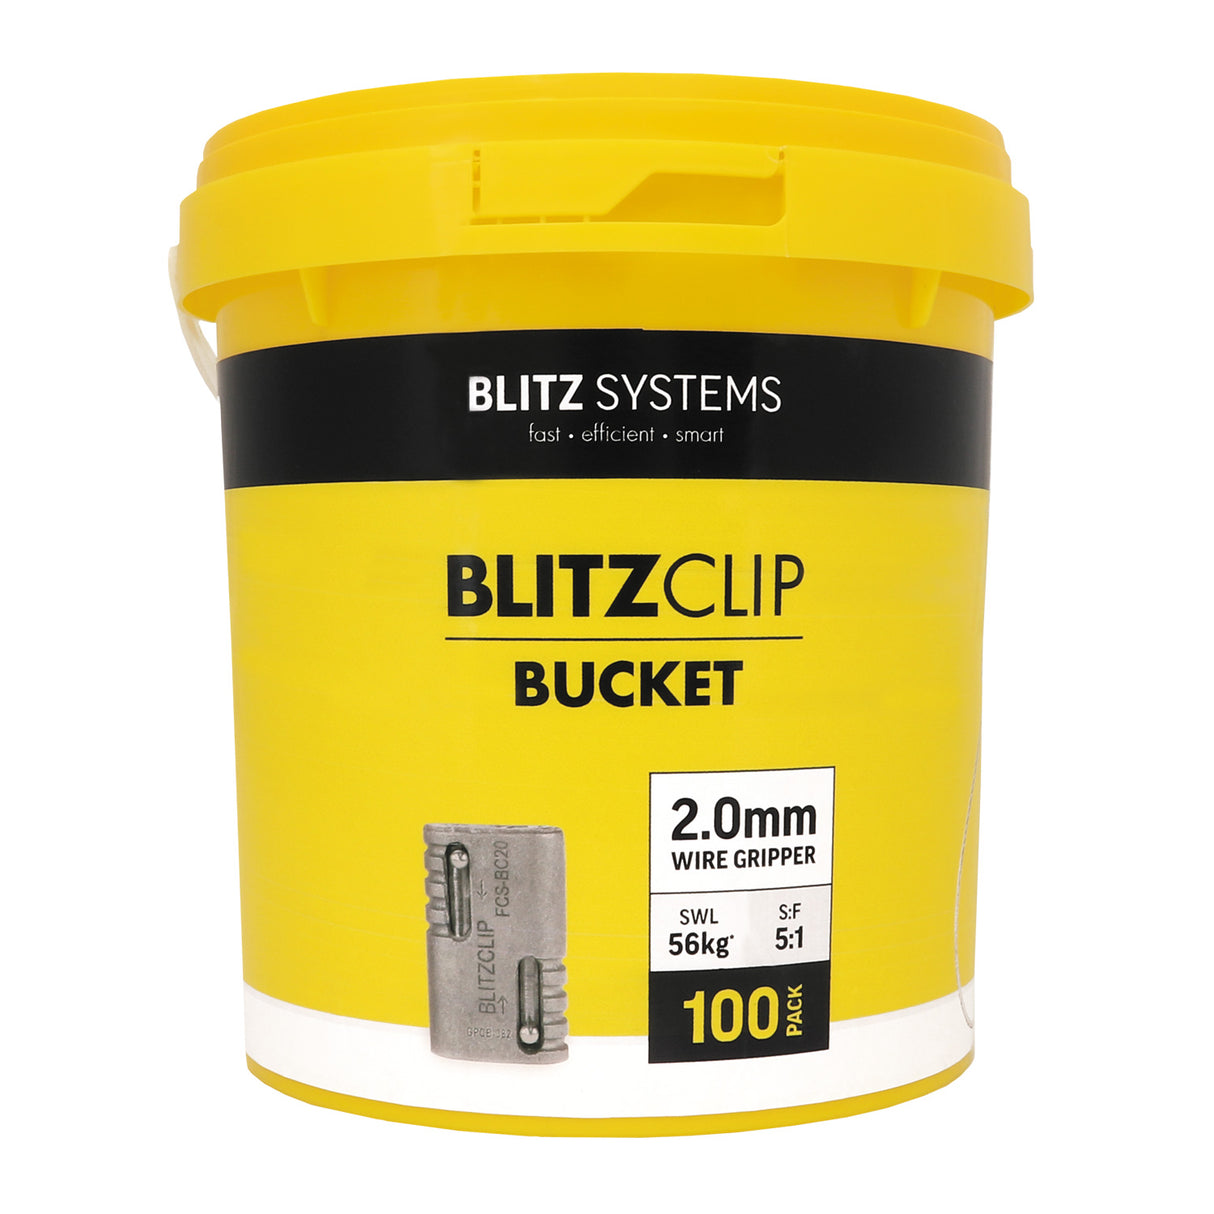 BLITZCLIP Bucket - 2.0mm Wire Gripper x 100 Pcs (1.5-2.0mm)